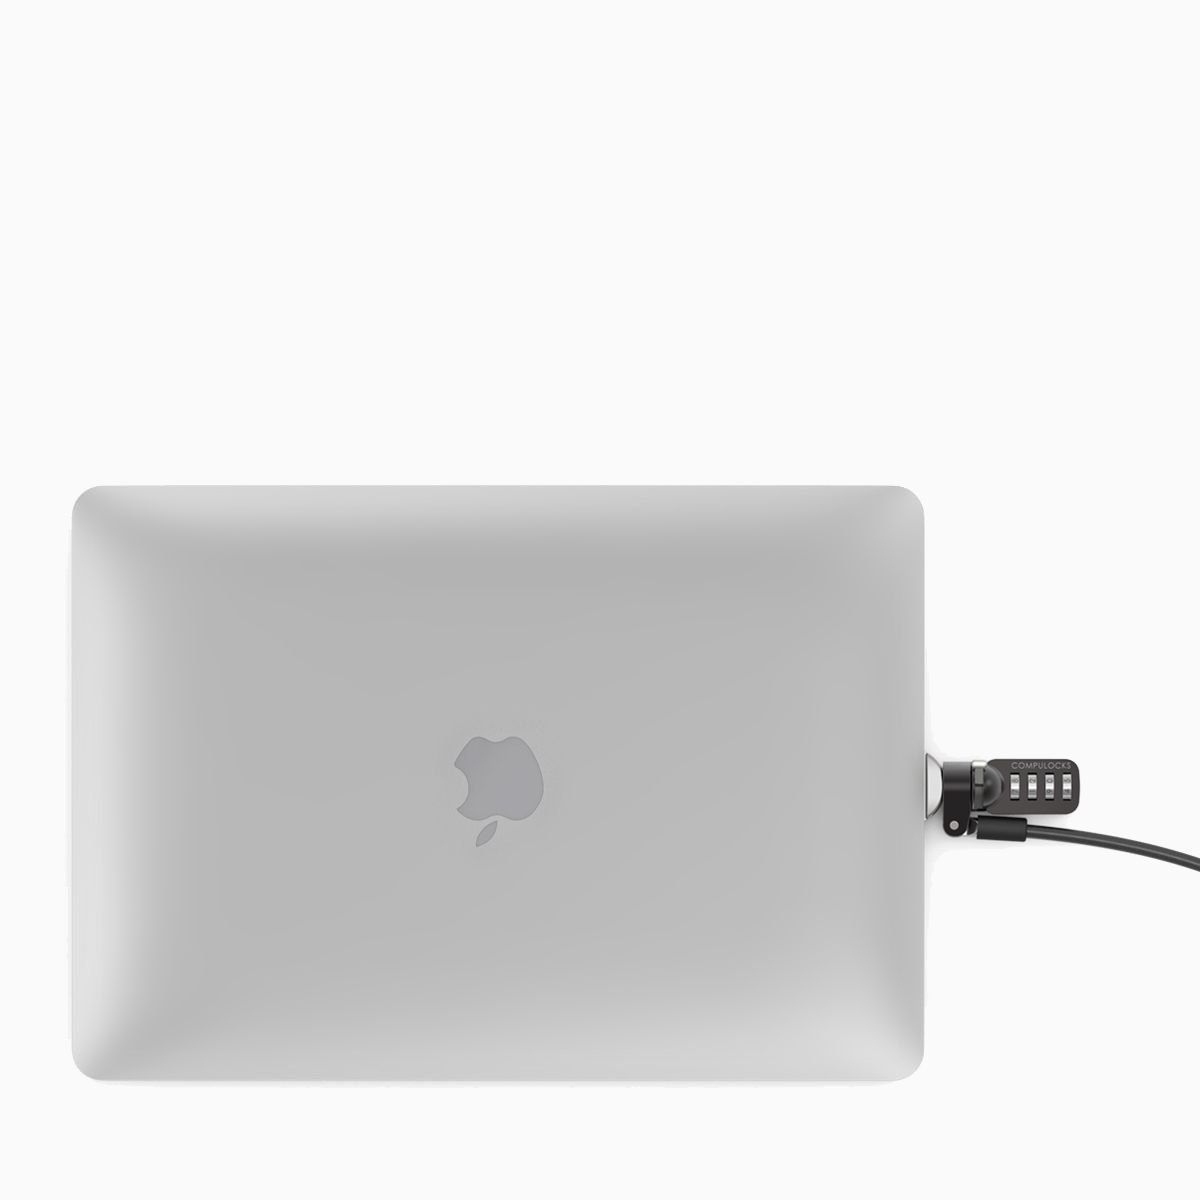 Maclocks MacBook Pro 13 Front Lock – The Ledge